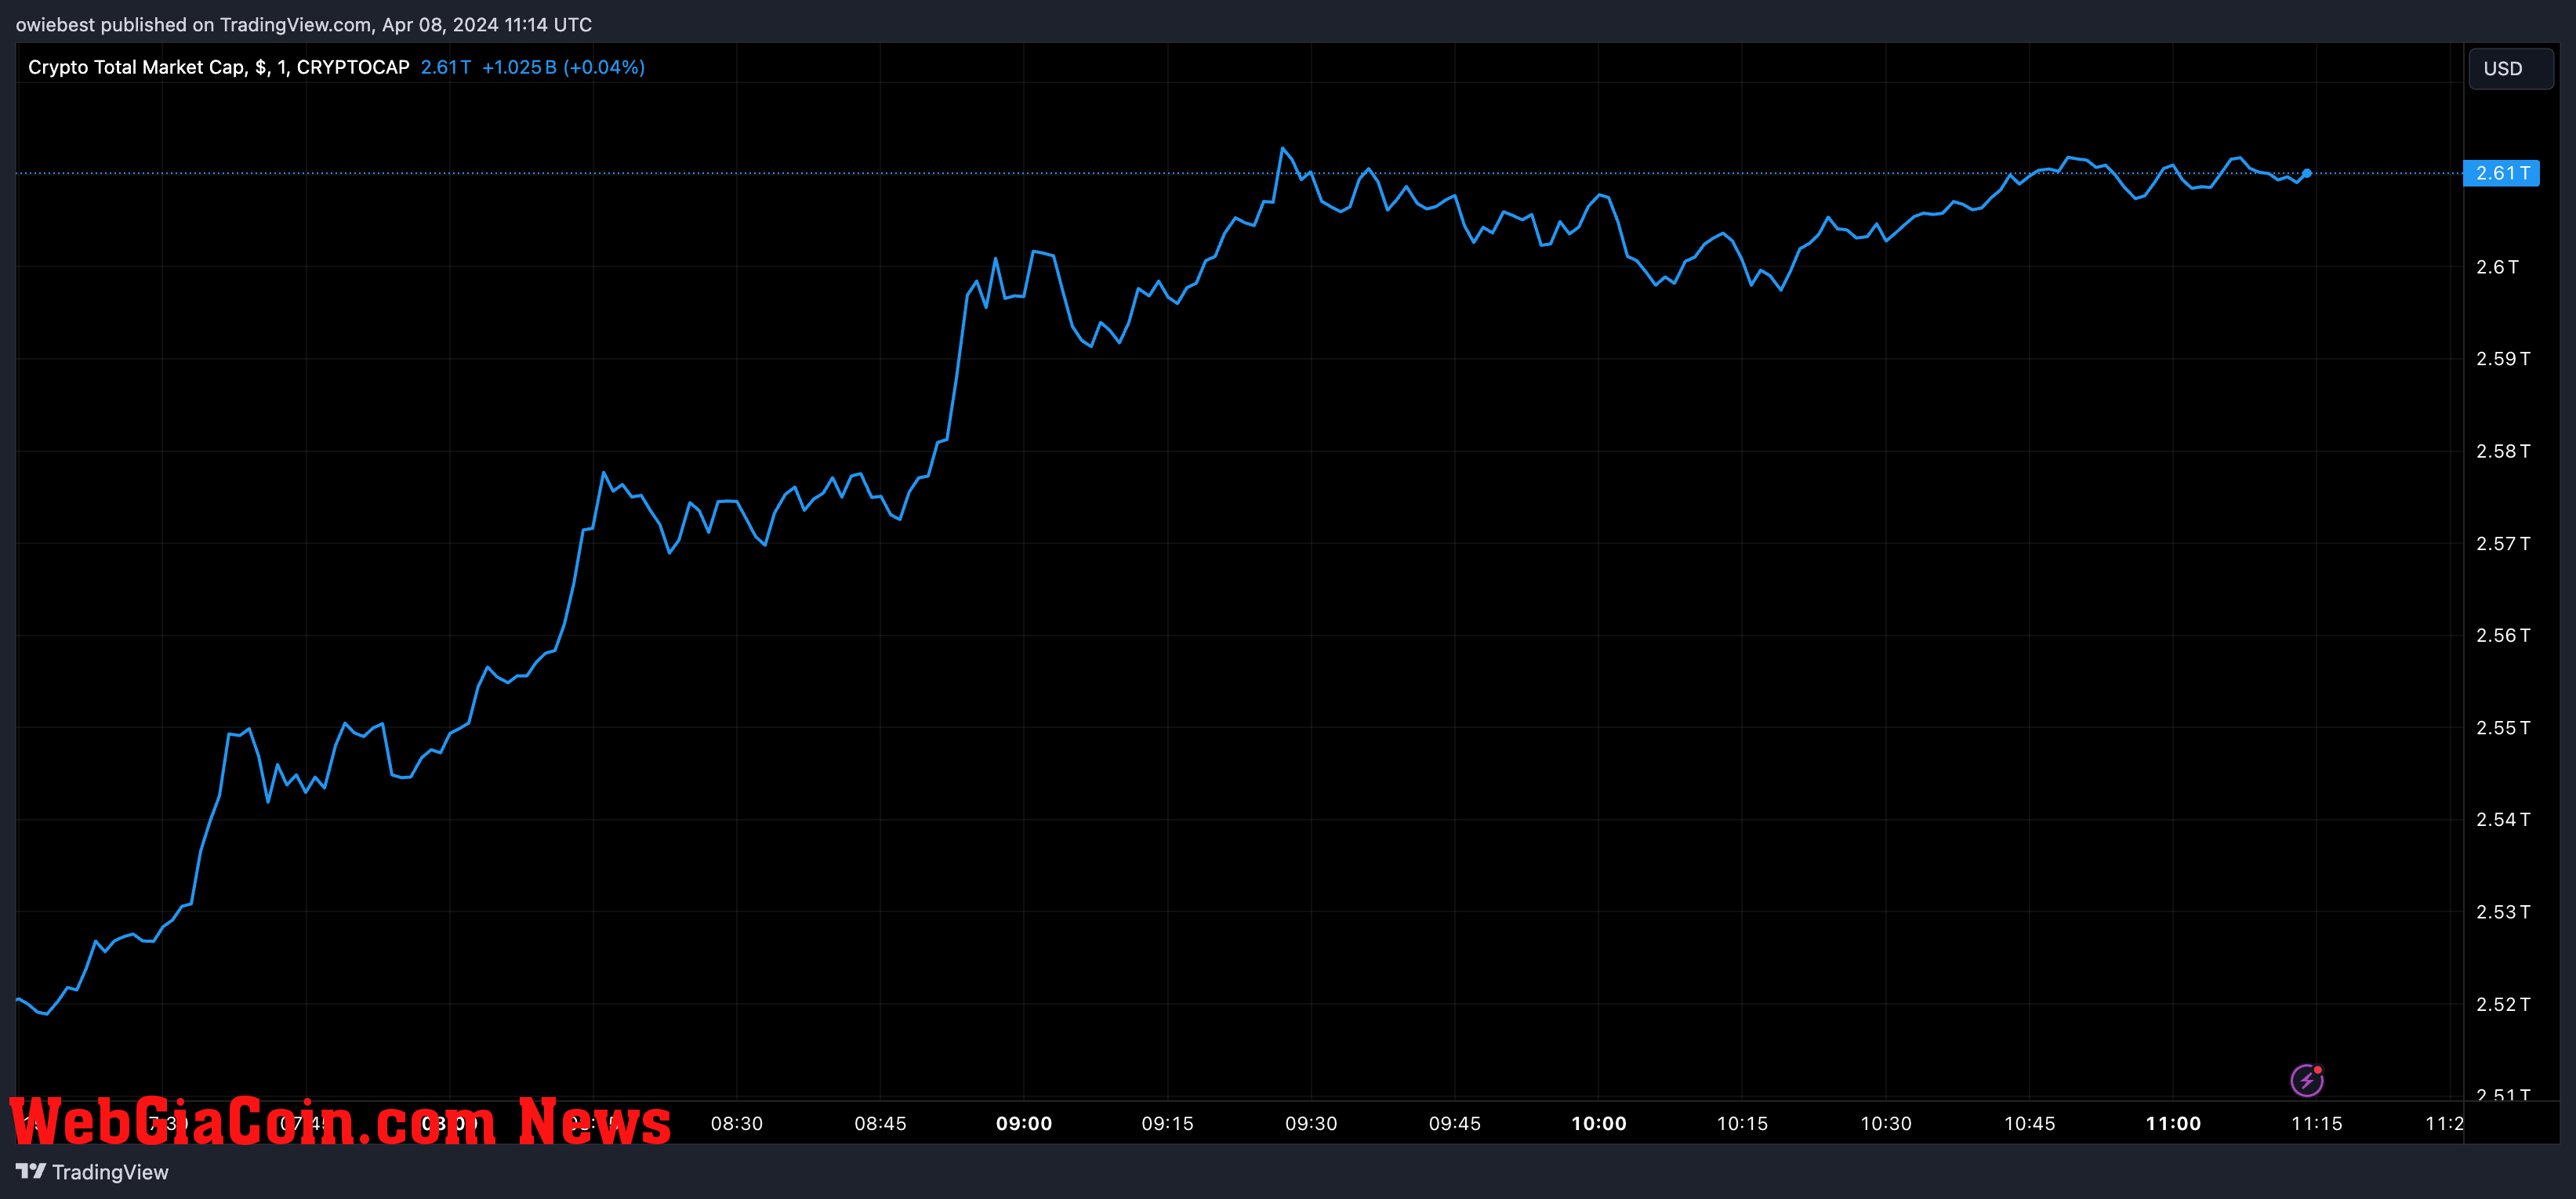 Crypto total market cap chart from Tradingview.com